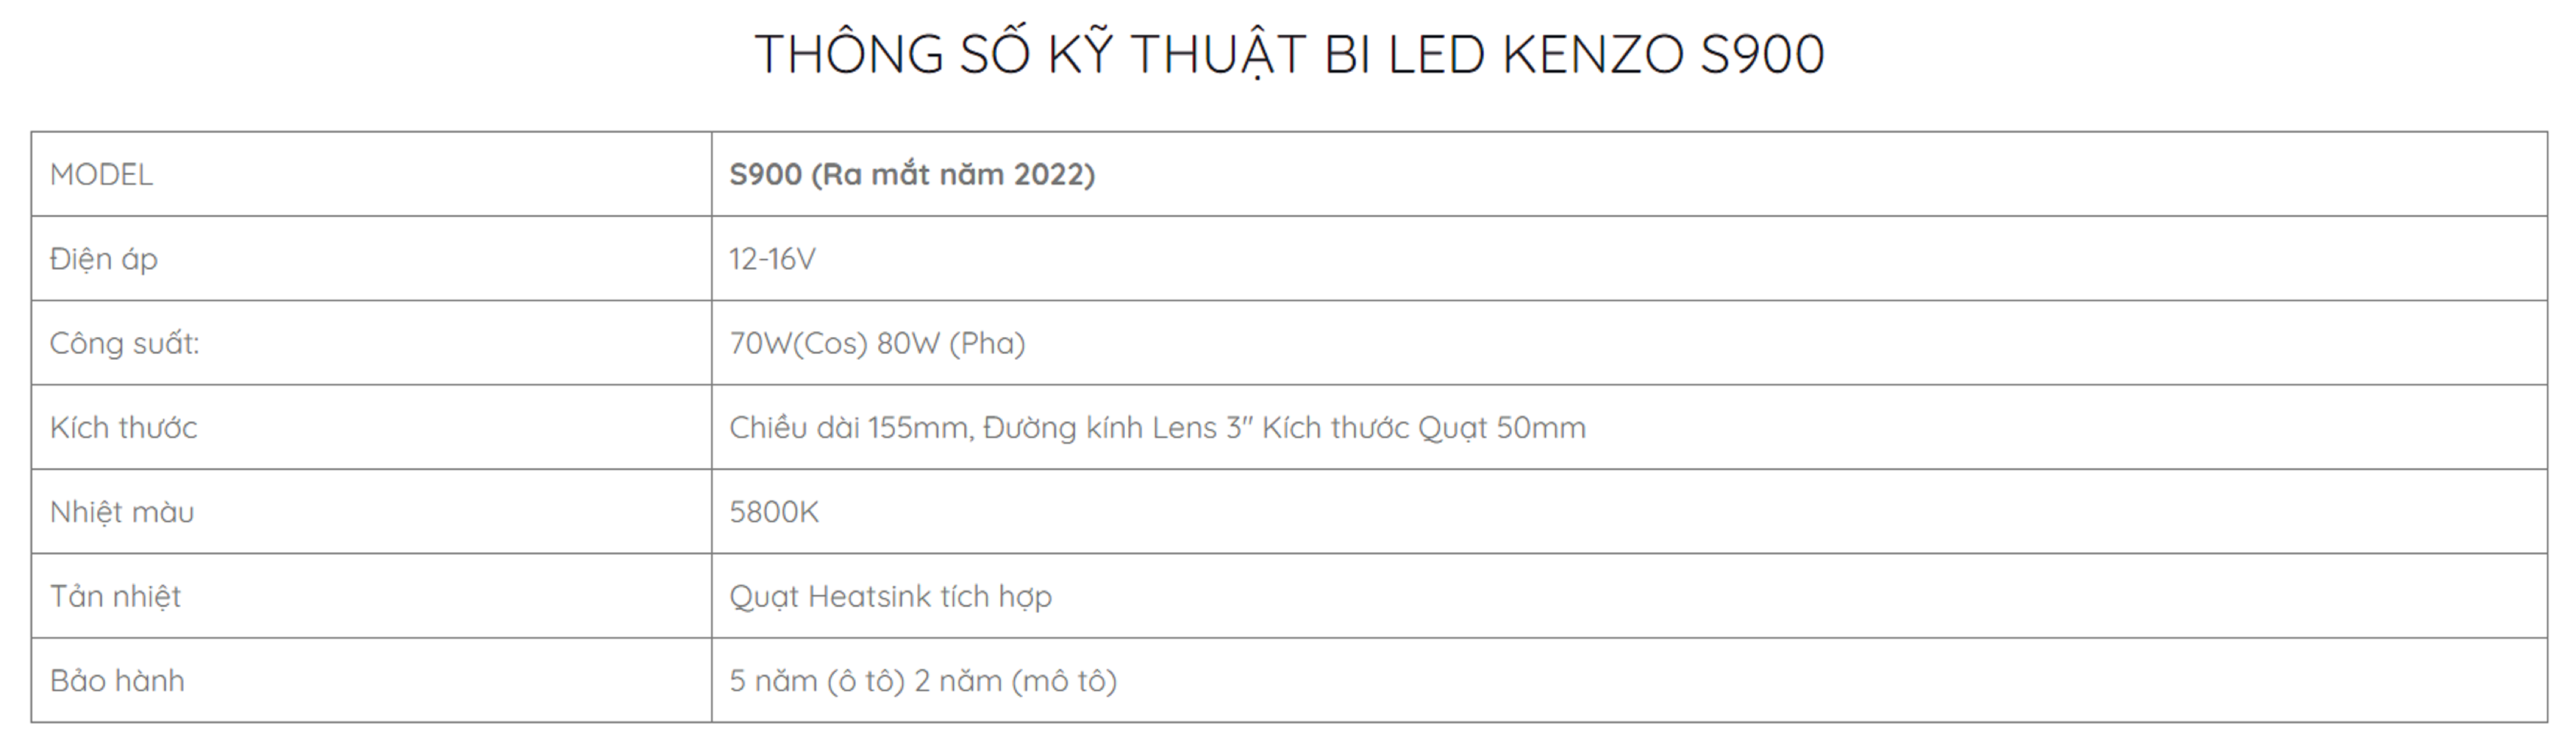 thong-so-ky-thuat-bi-led-kenzo-s900-2429440